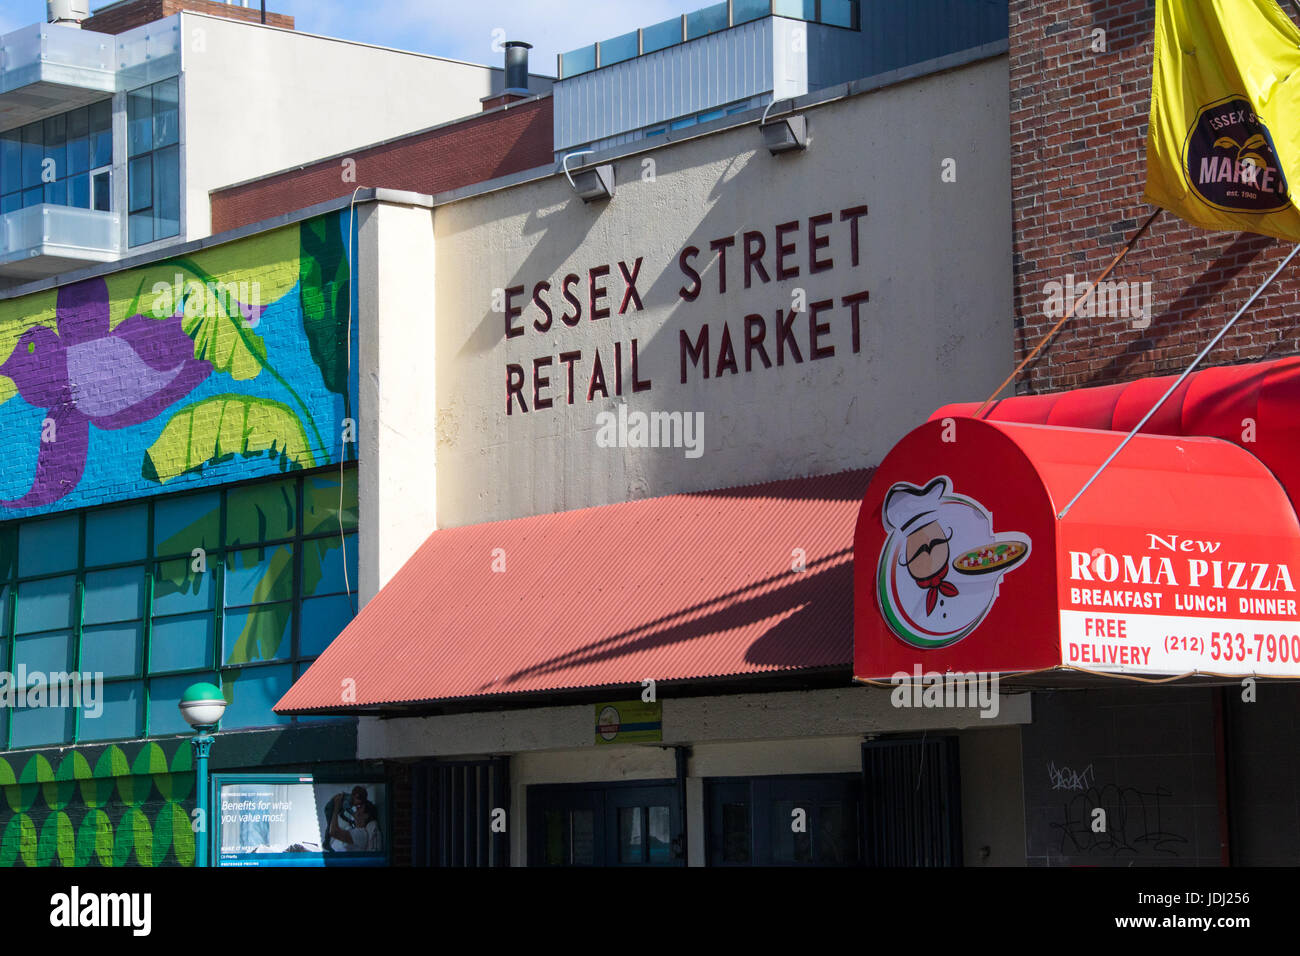 Essex Street Market, Lower East Side, Manhattan, New York CIty, USA Stock Photo